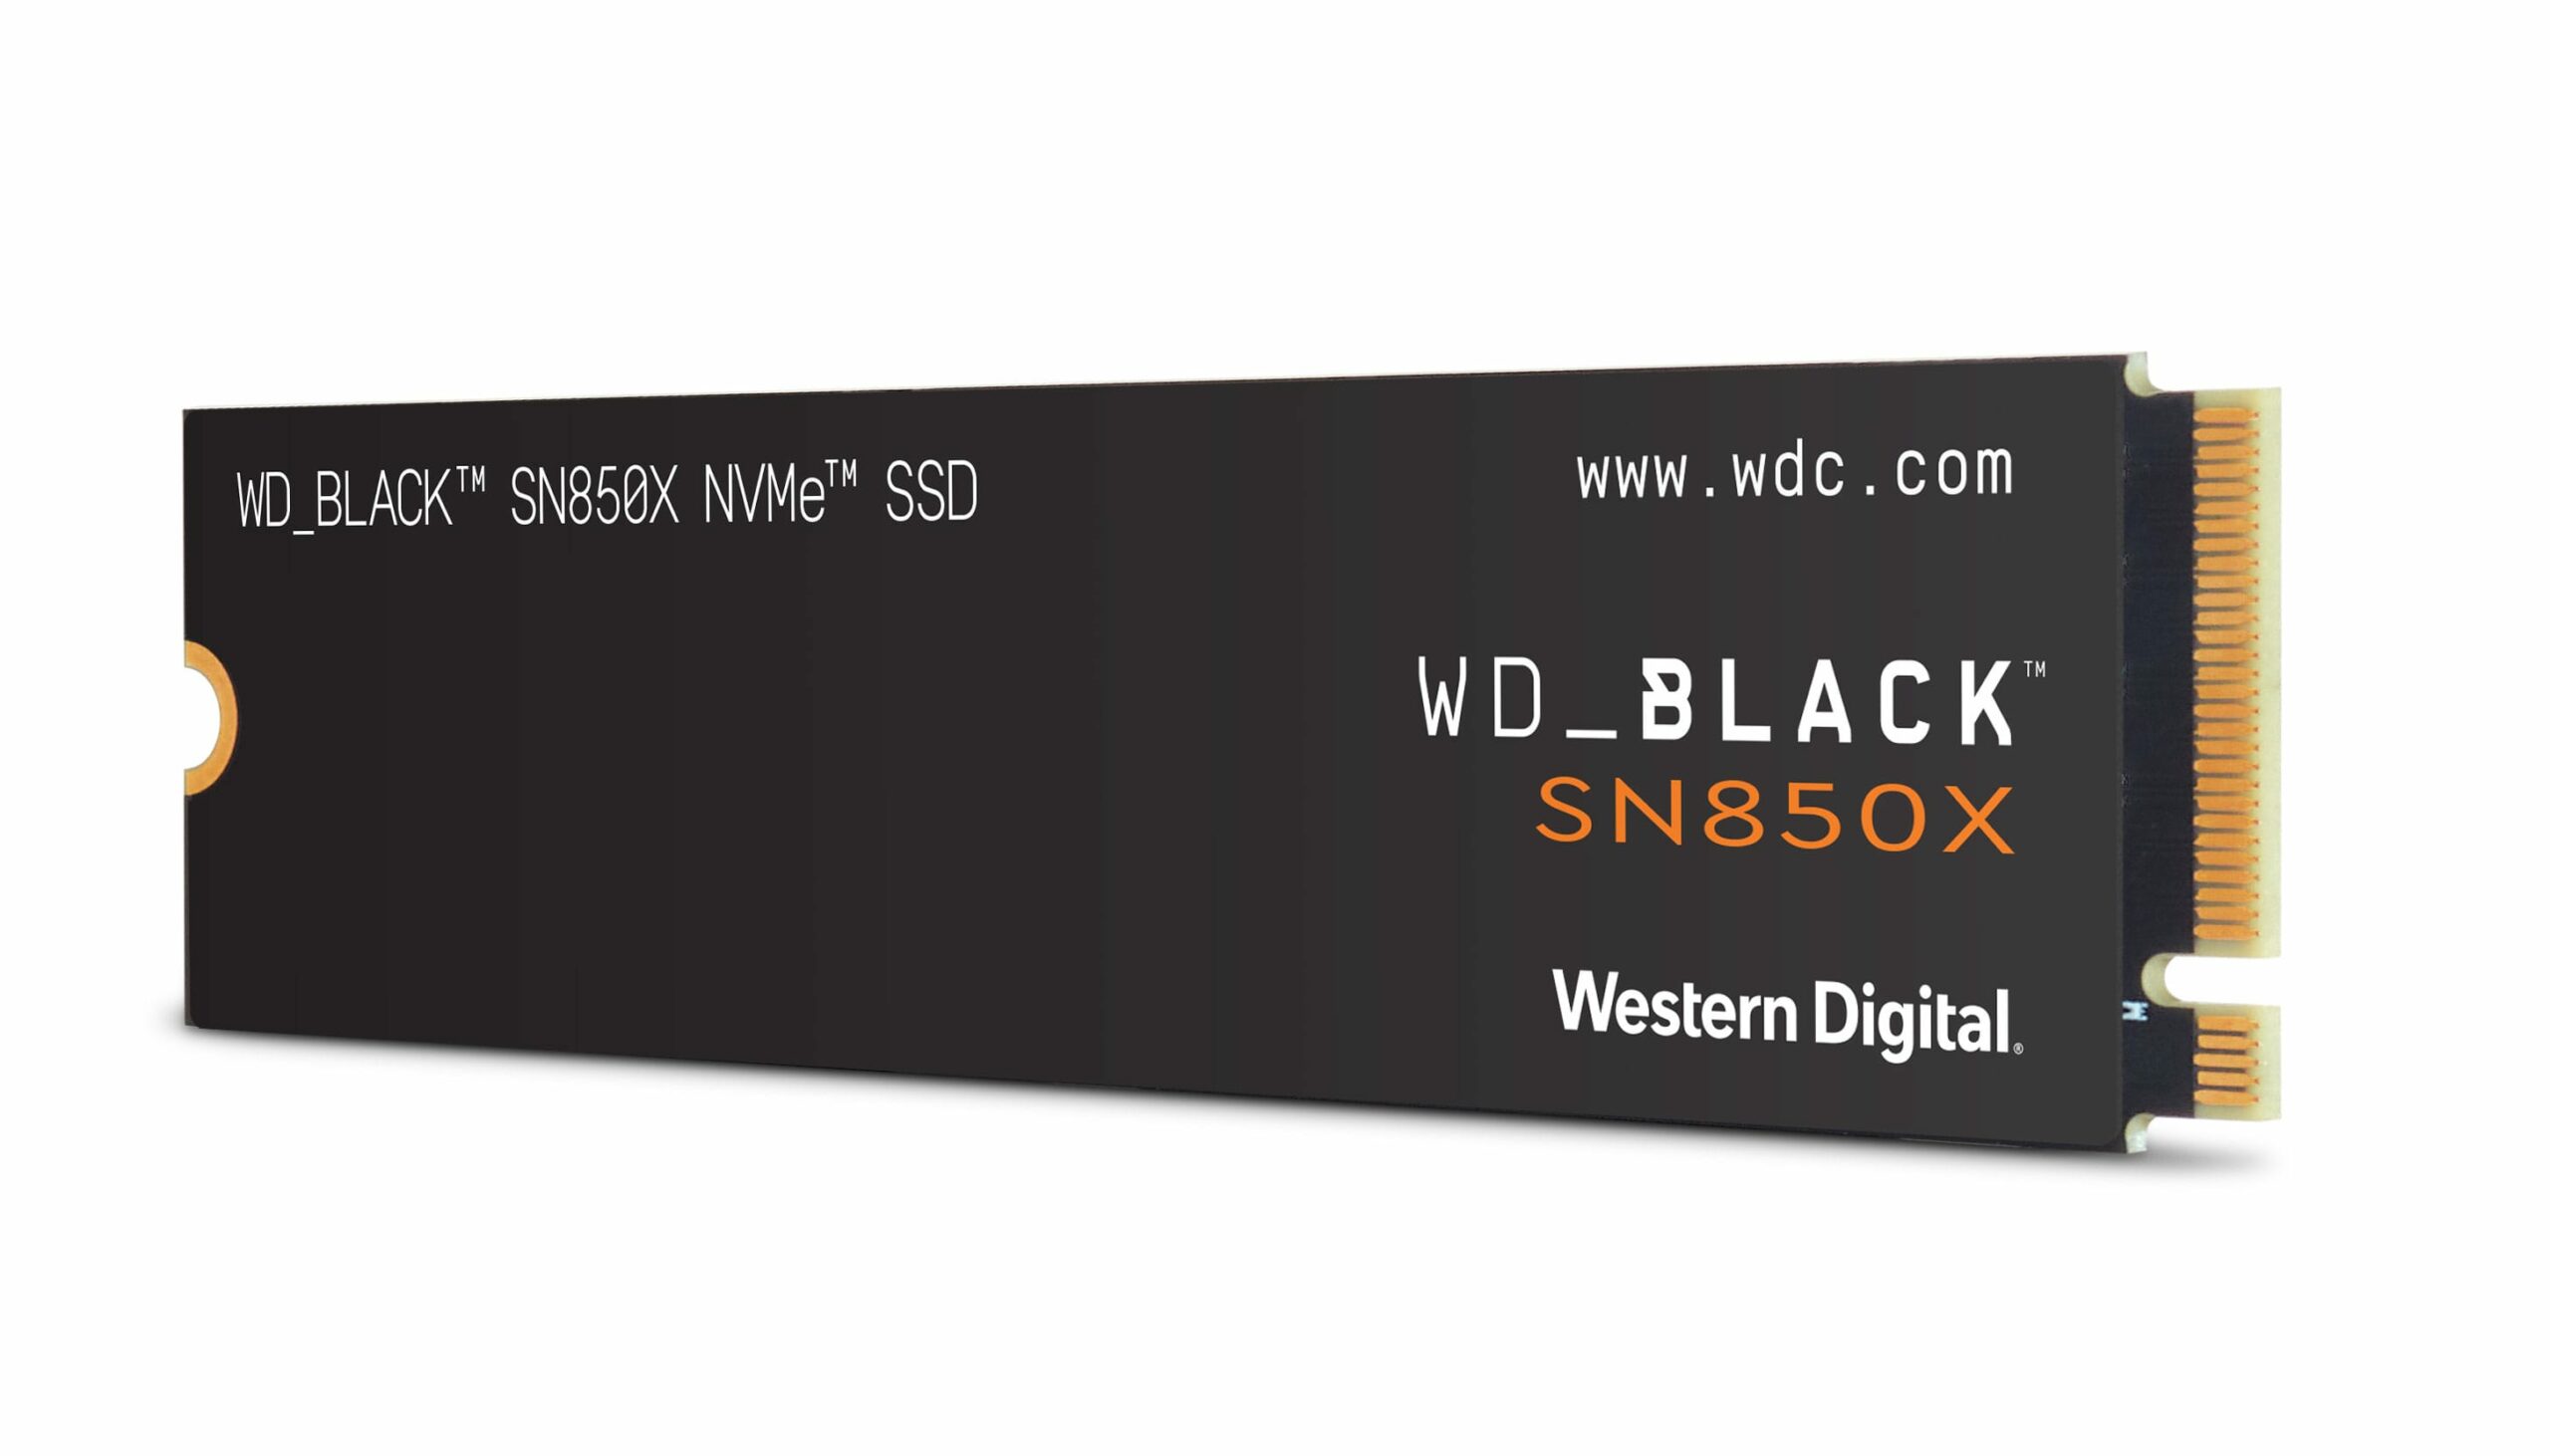 Primary_WD_BLACK SN850X NVMe SSD prod-angle